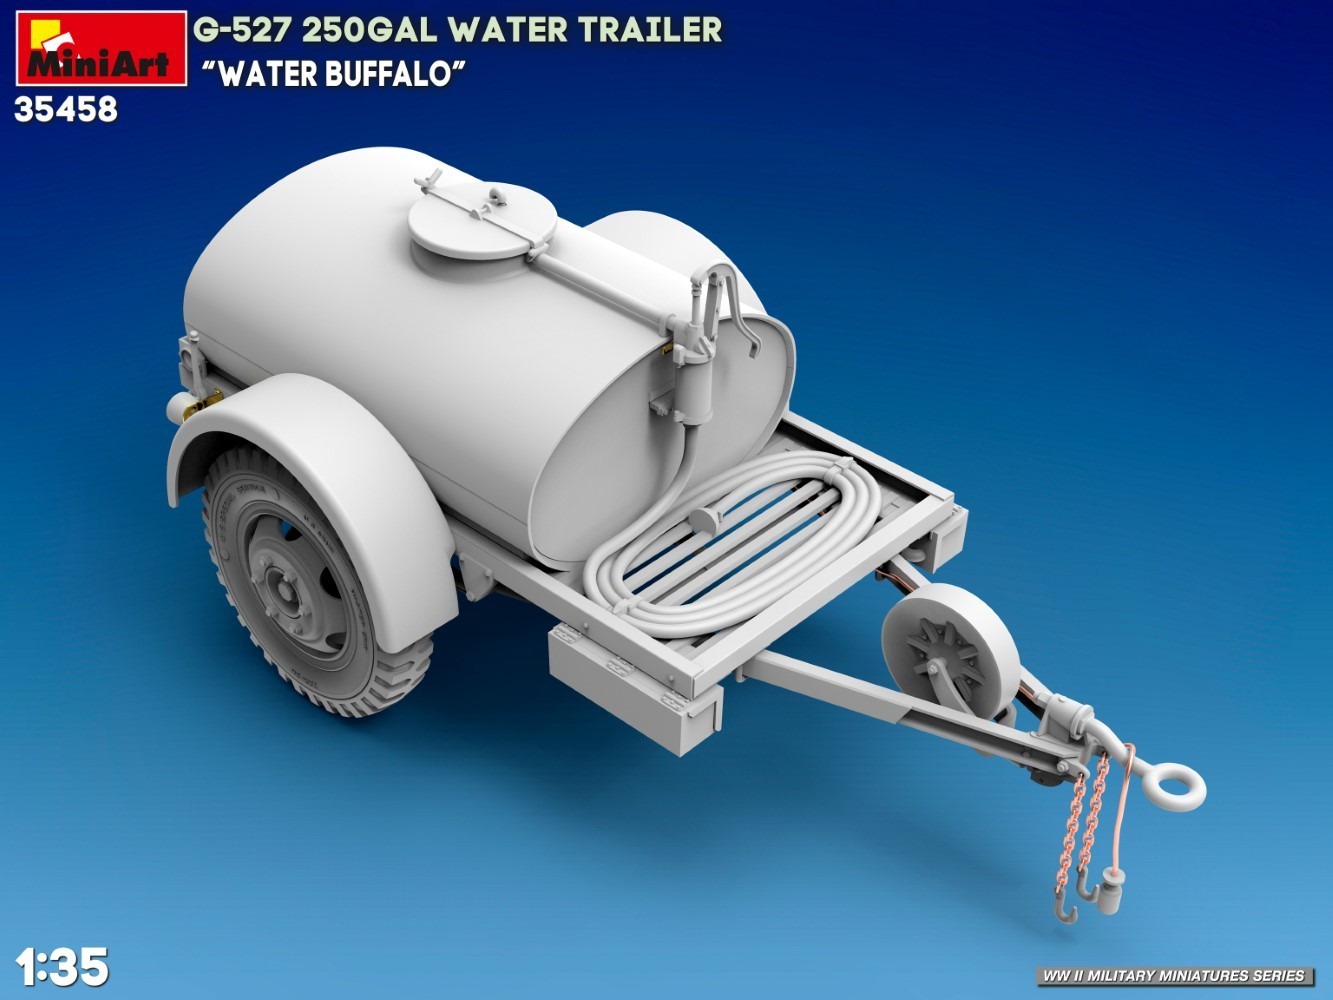 MiniArt G-527 250GAL Water Trailer “Water Buffalo” CAD-4